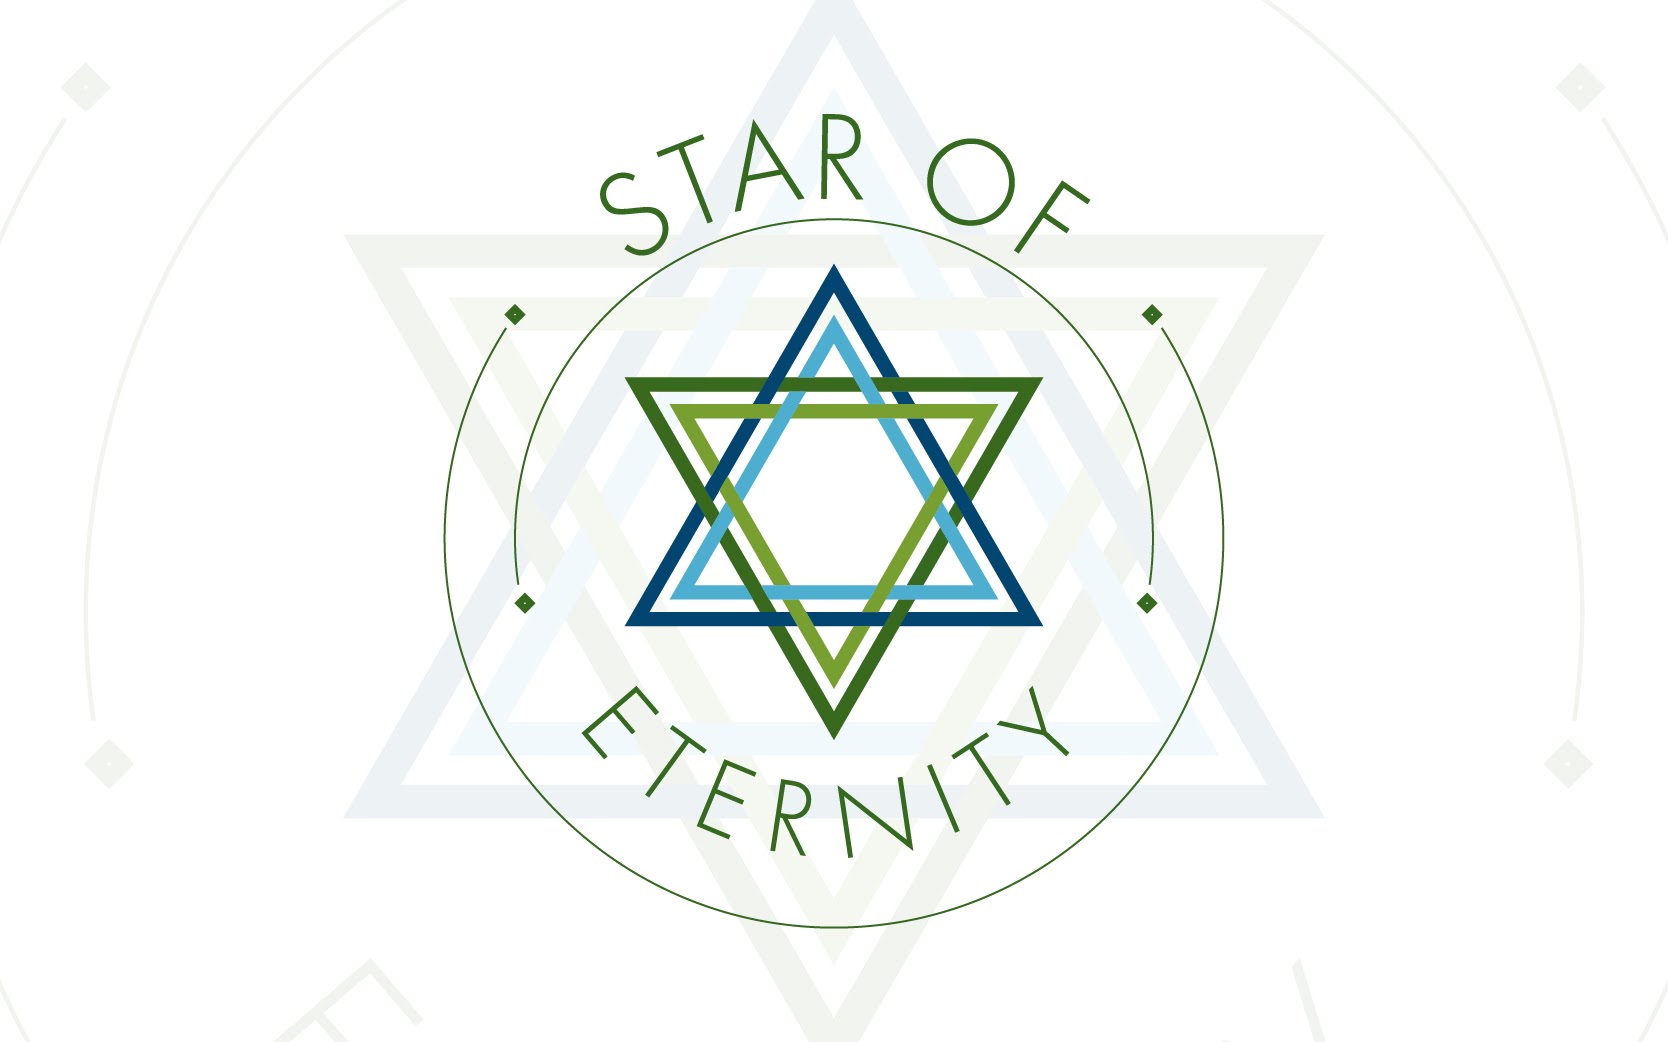 Star of eternity